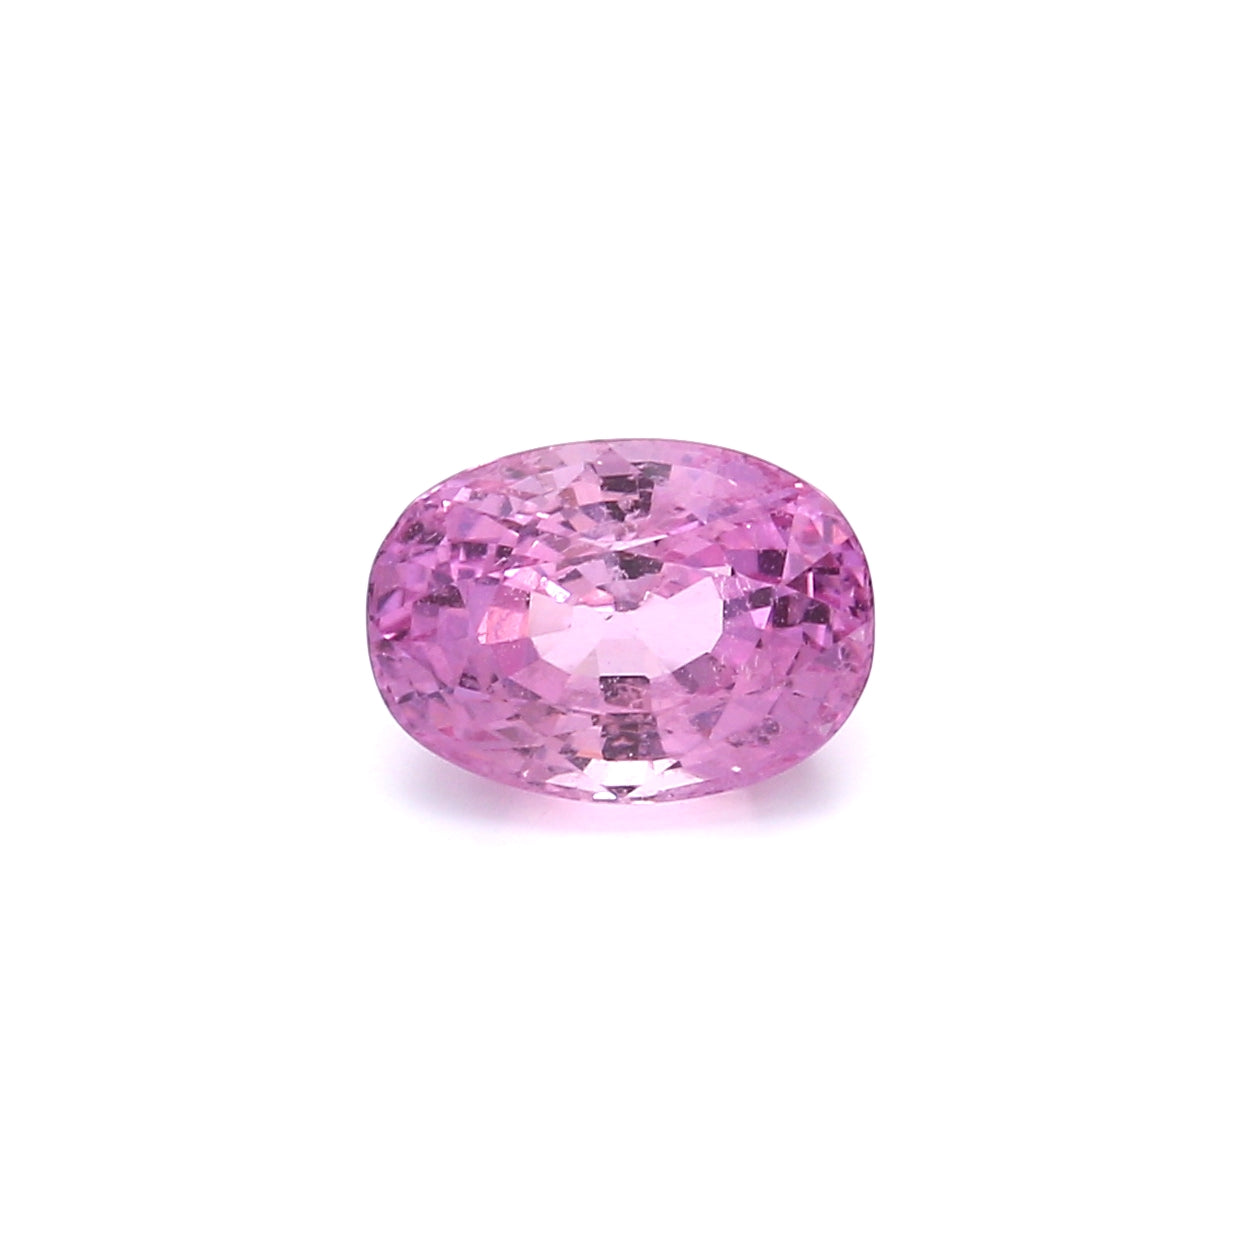 2.77ct Pink, Oval Sapphire, Heated, Madagascar - 8.89 x 6.52 x 5.43mm